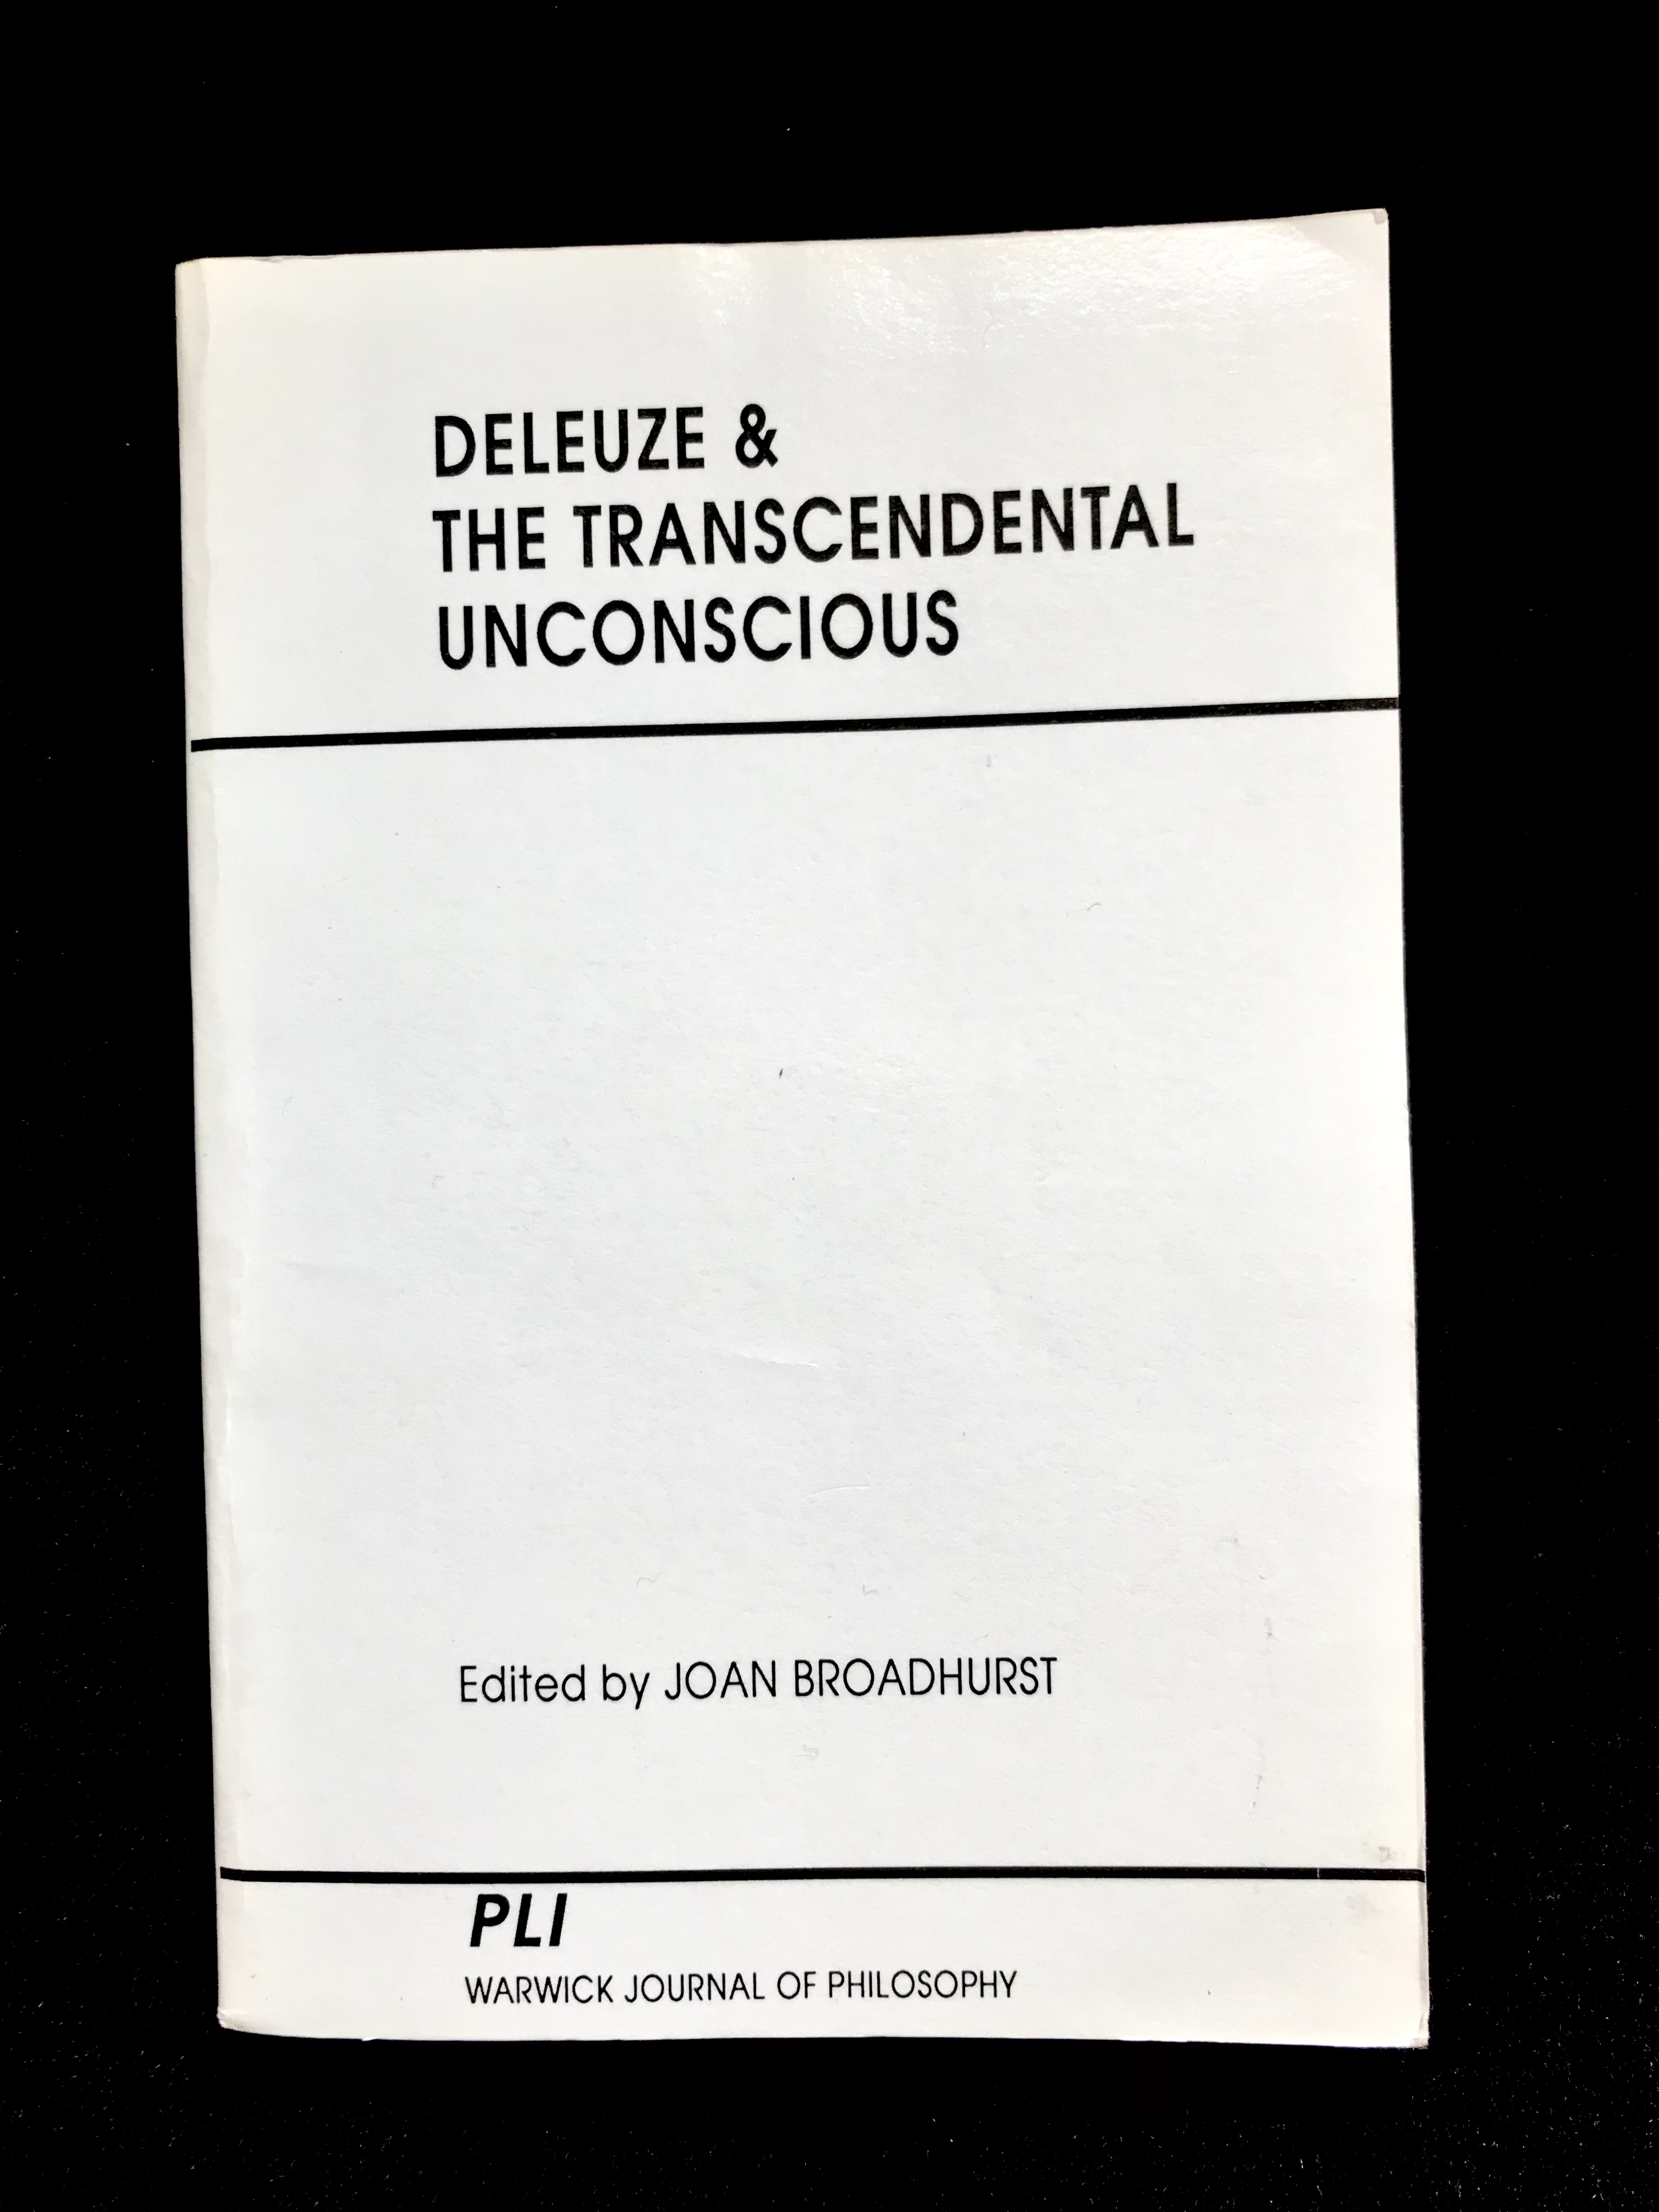 Deleuze & The Transcendental Unconscious Edited by Joan Broadhurst